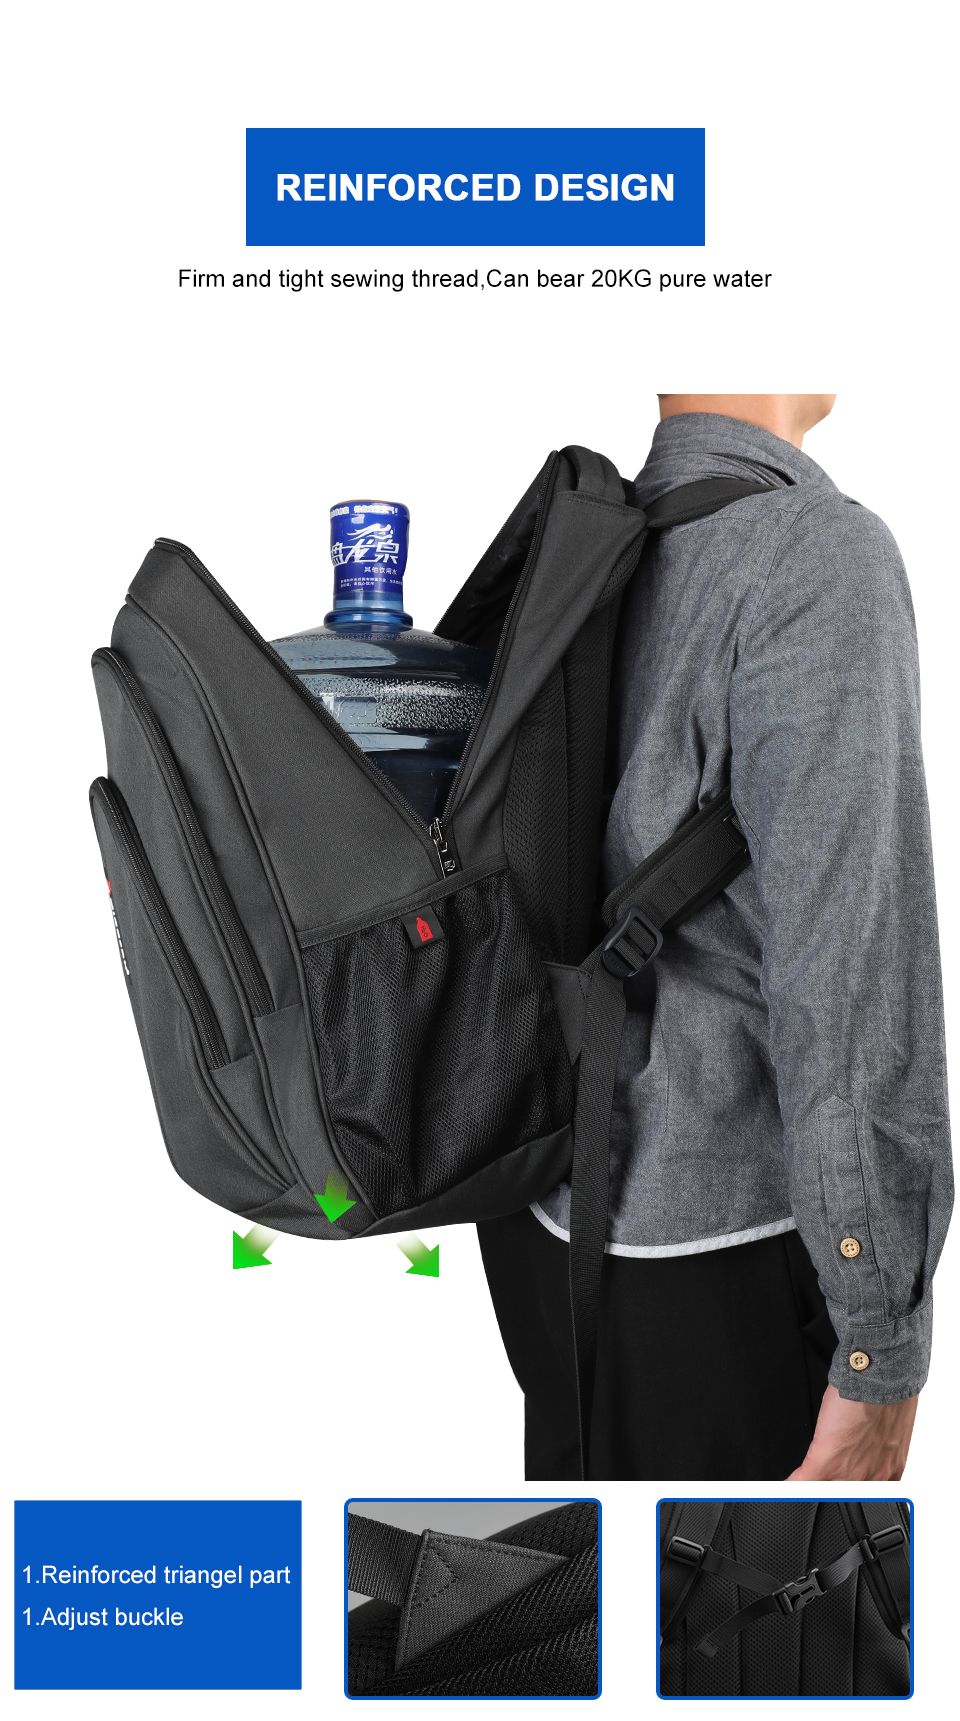 2020-Tigernu-New-Large-Capacity-Backpack-156-inch-Anti-Theft-Waterproof-Business-Men-Laptop-Bag-1642940